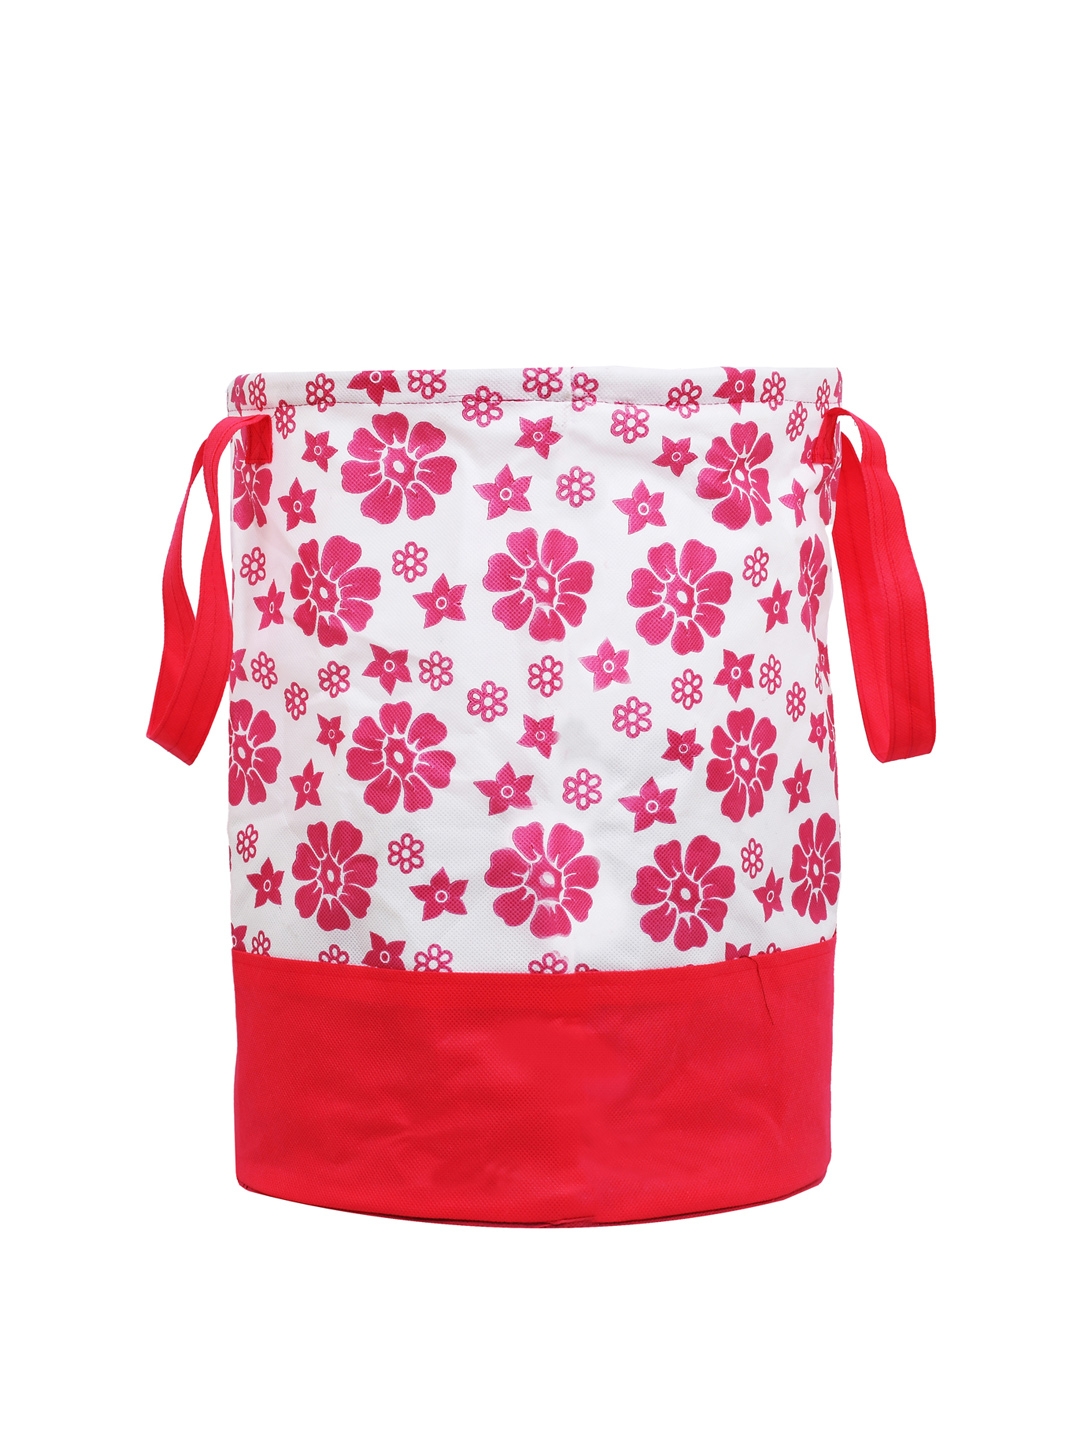 Kuber Industries Pink   White Floral Printed Waterproof Canvas Laundry Bag 45 L